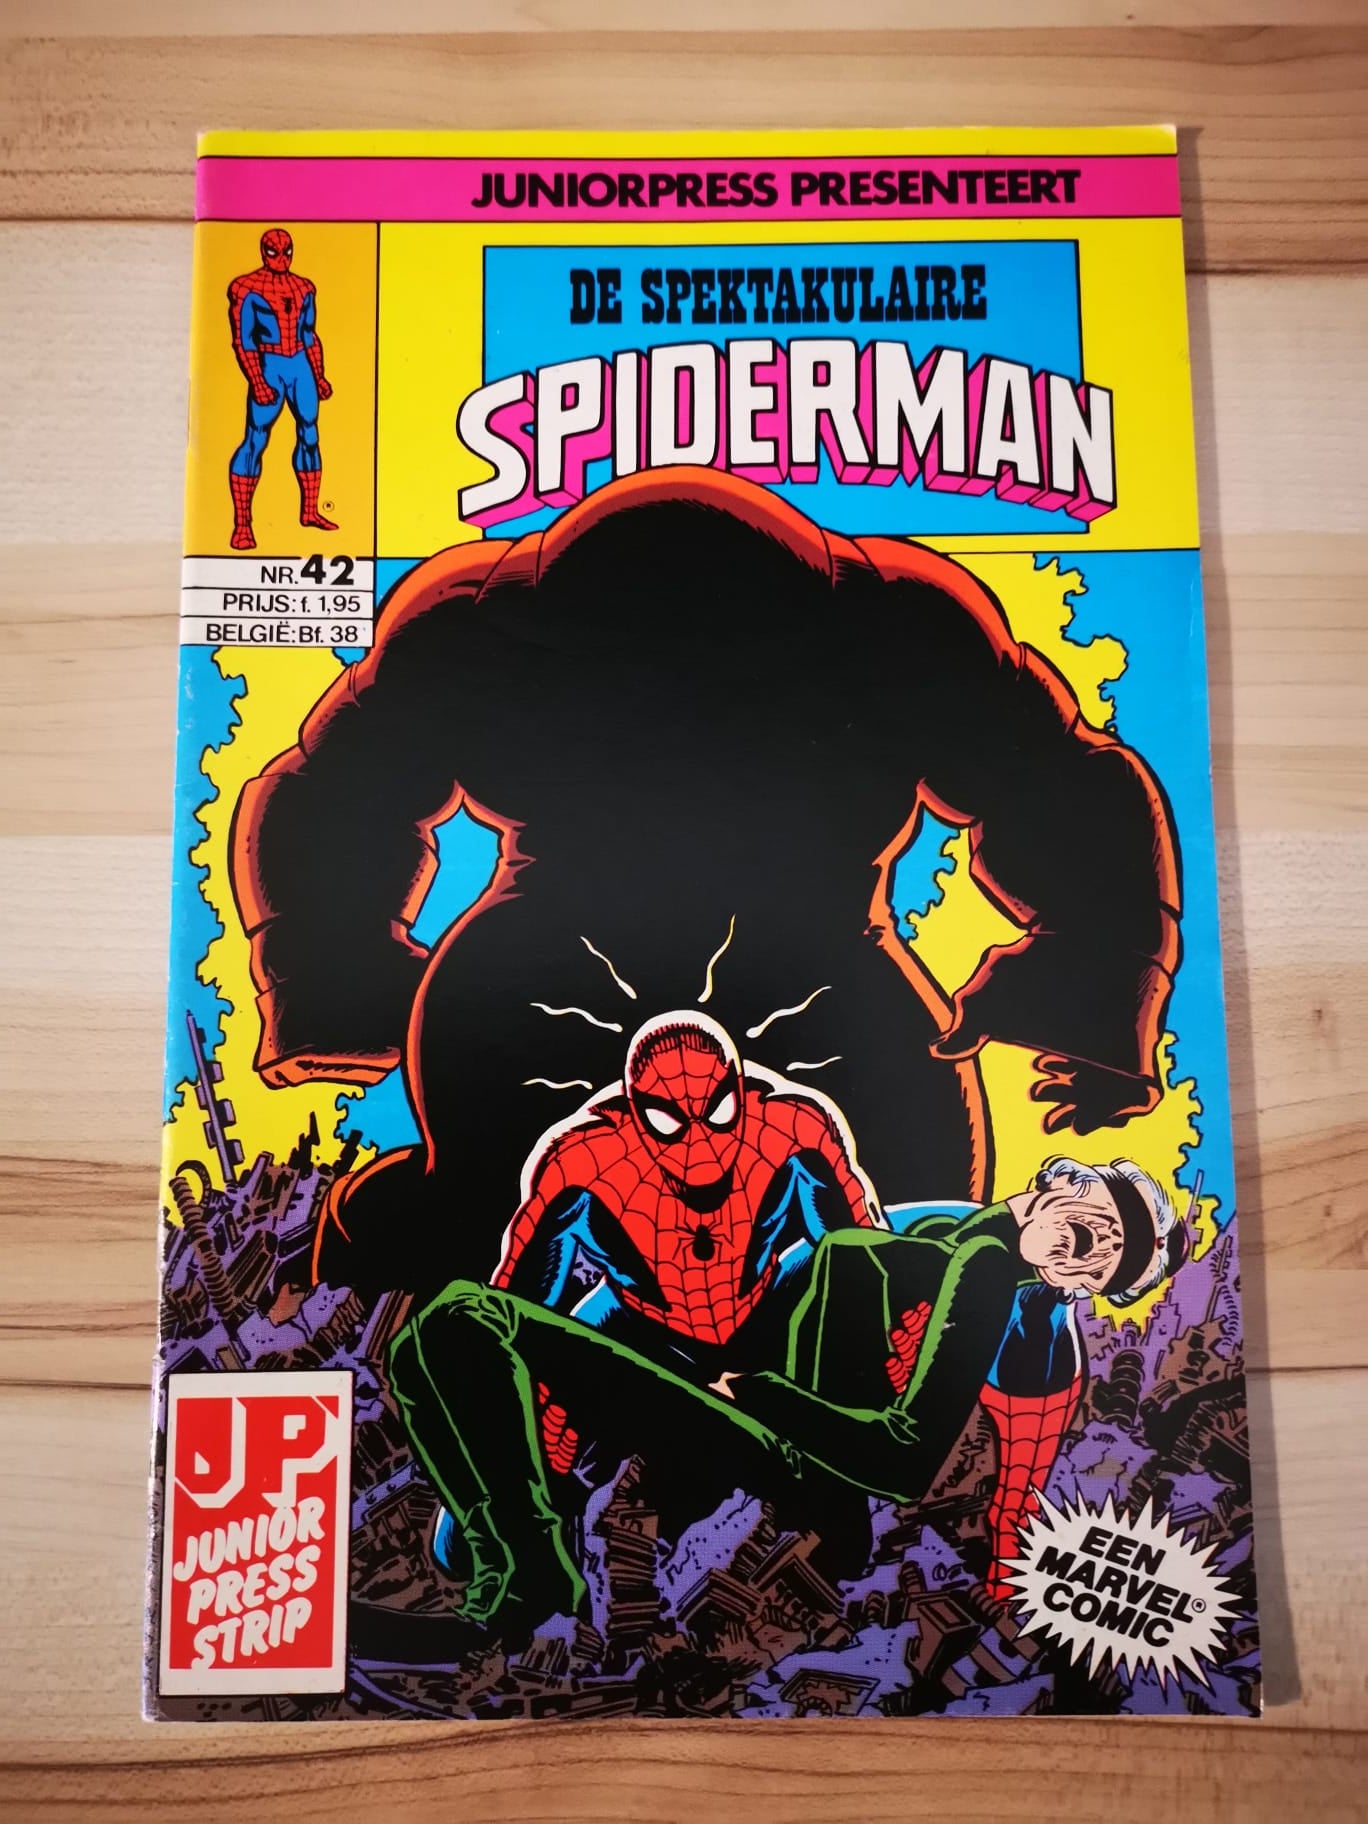 De spektakulaire spiderman #42